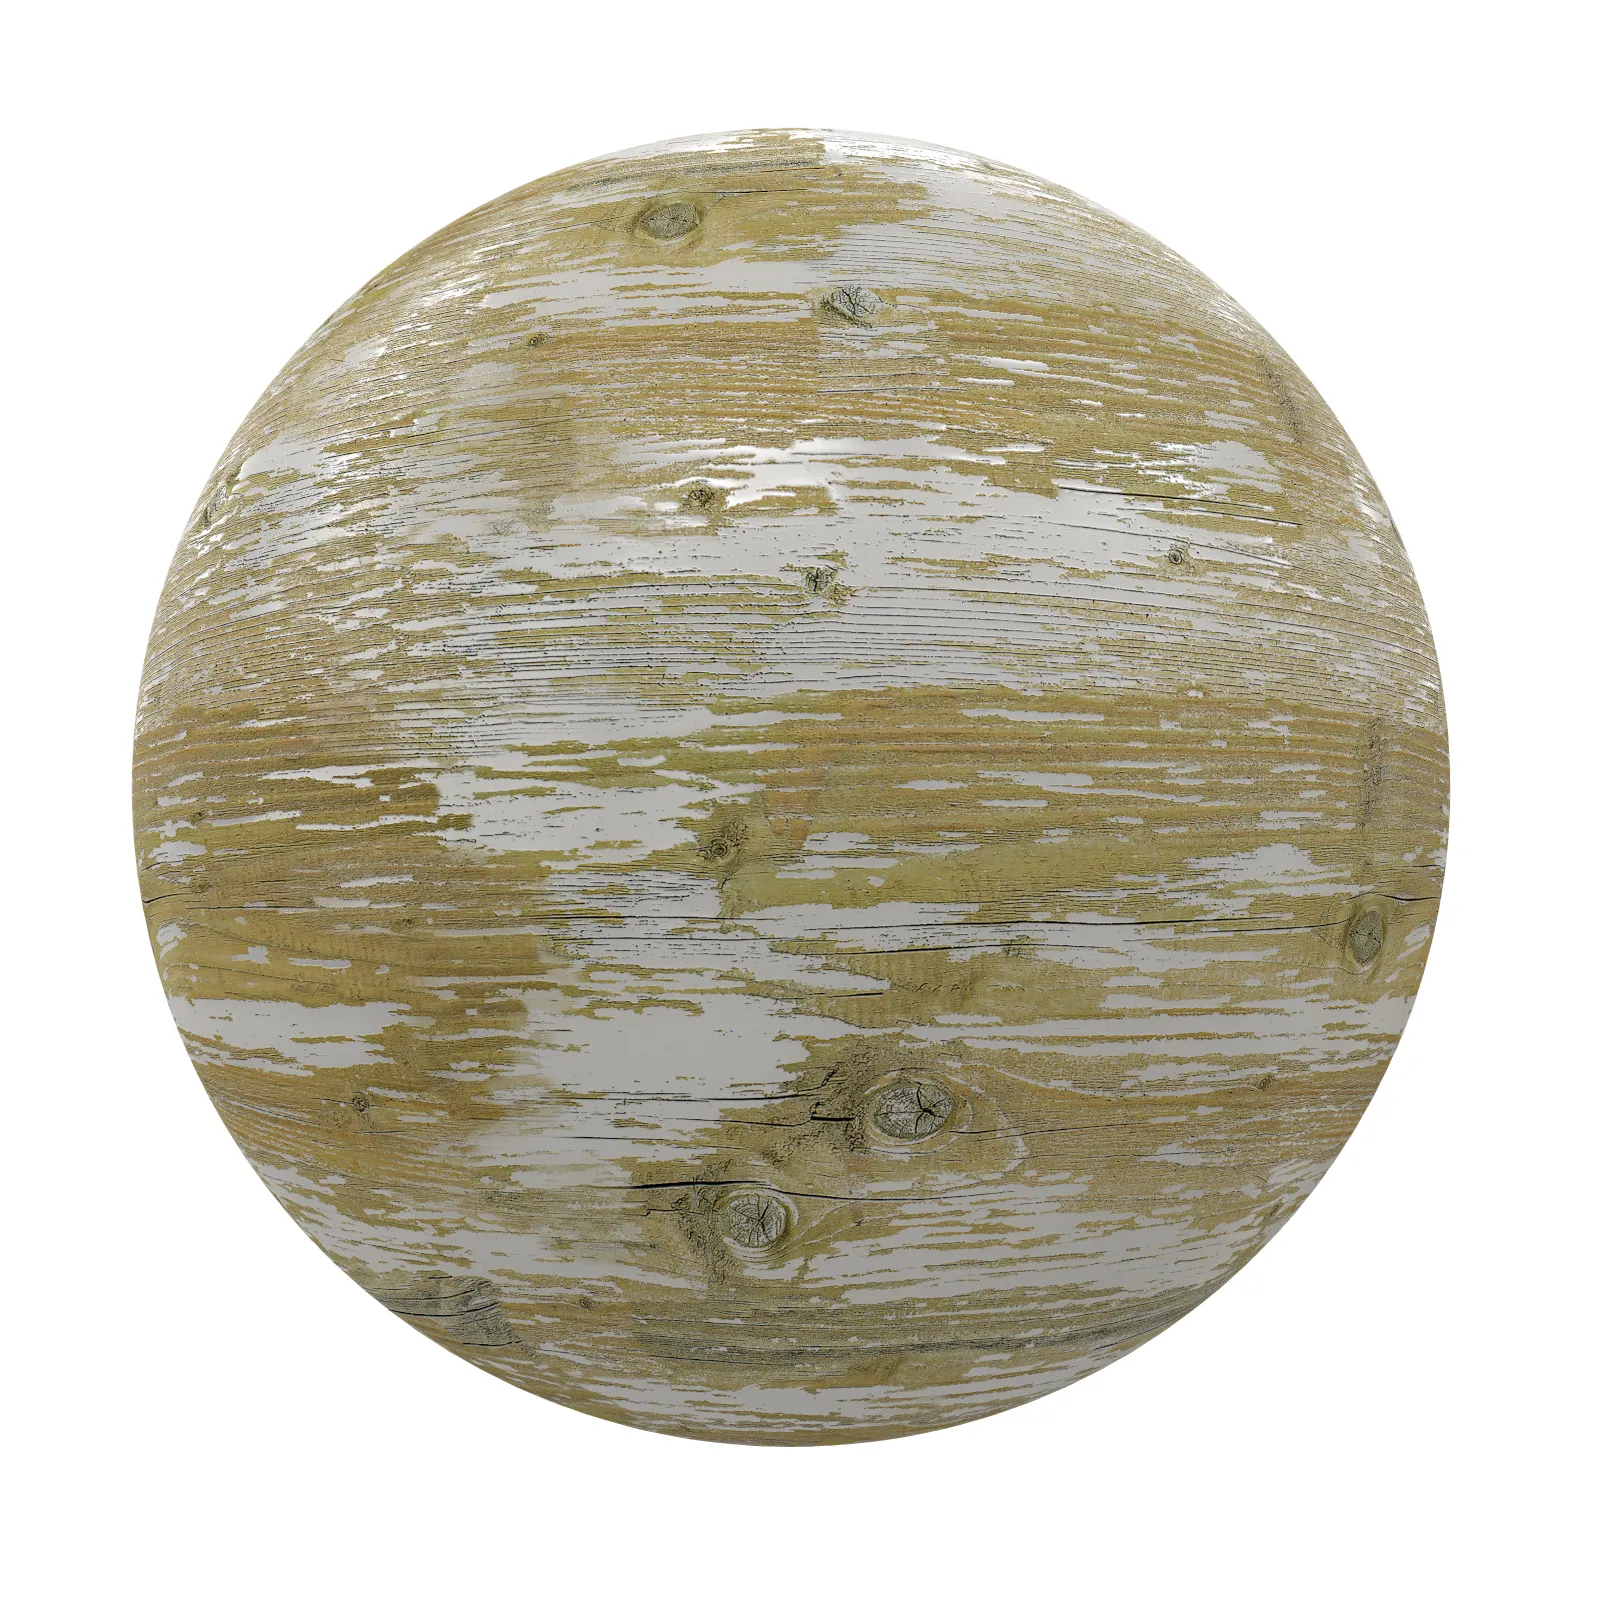 3ds Max Files – Texture – 8 – Wood Texture – 106 – Wood Texture by Minh Nguyen